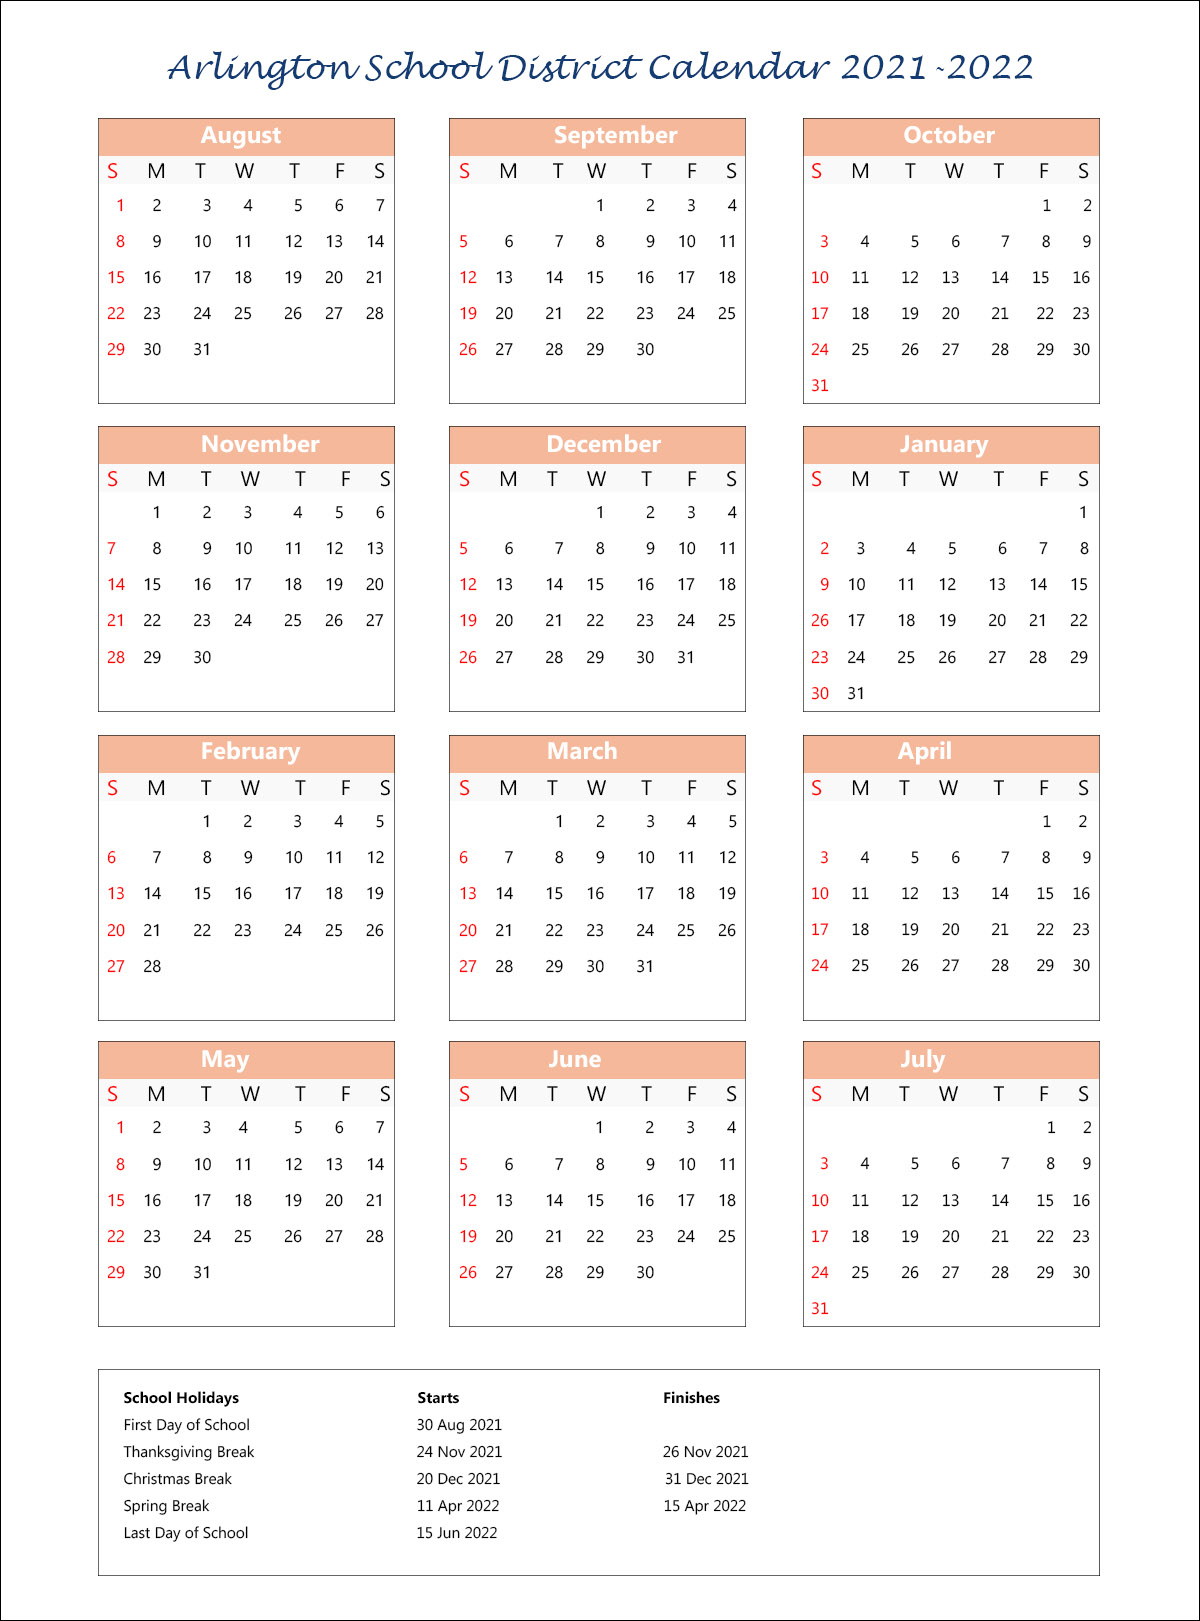 Arlington School District Calendar 2021